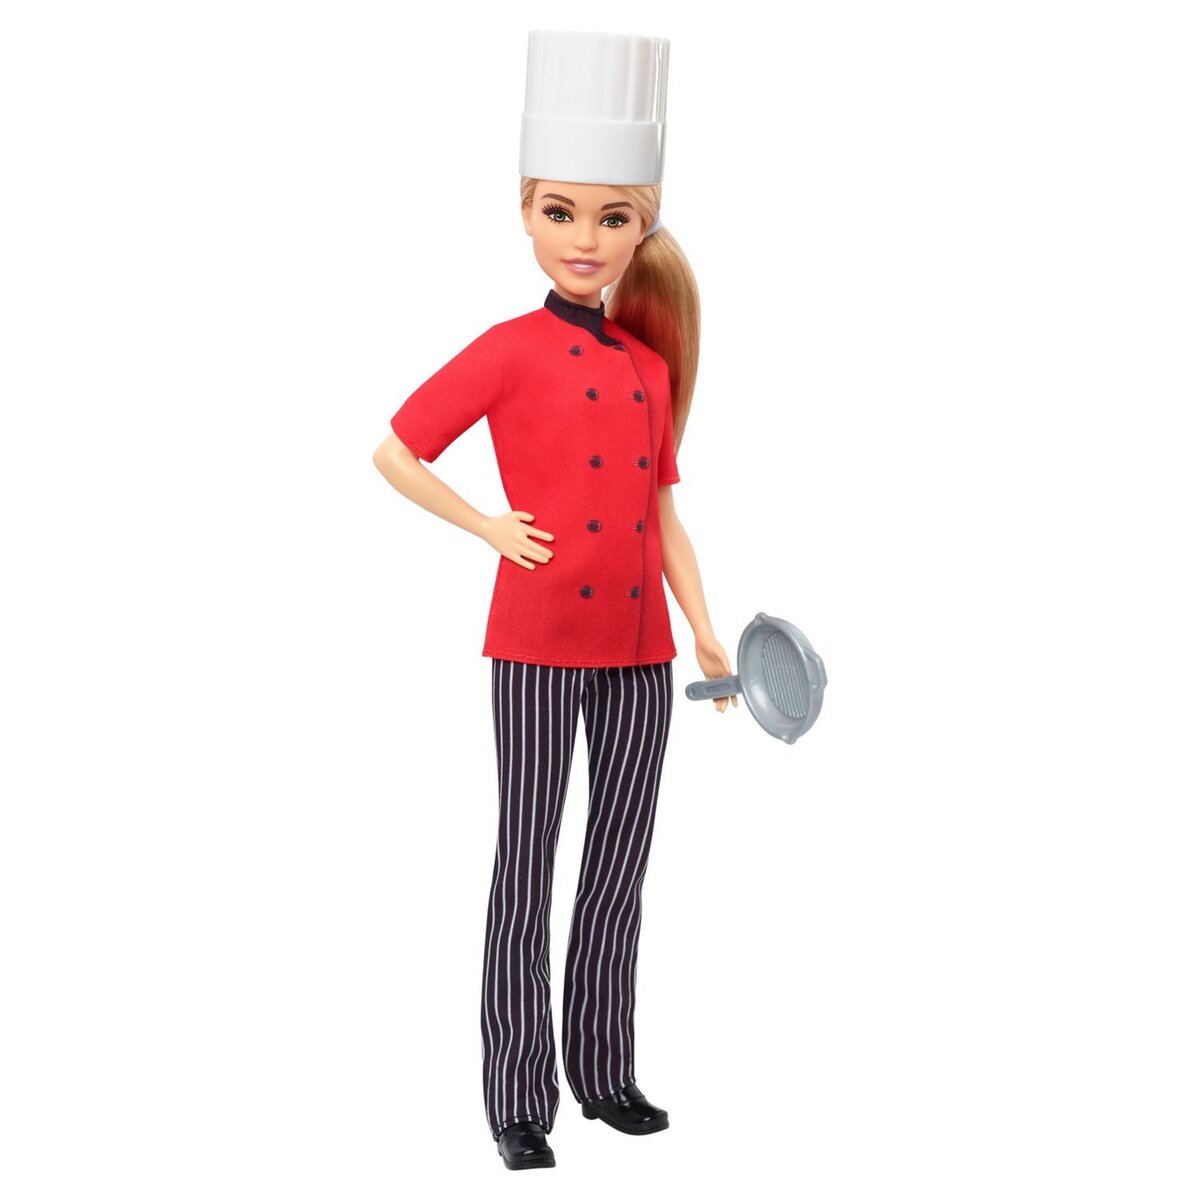 BARBIE Poupée Barbie Métiers Chef de cuisine blonde 